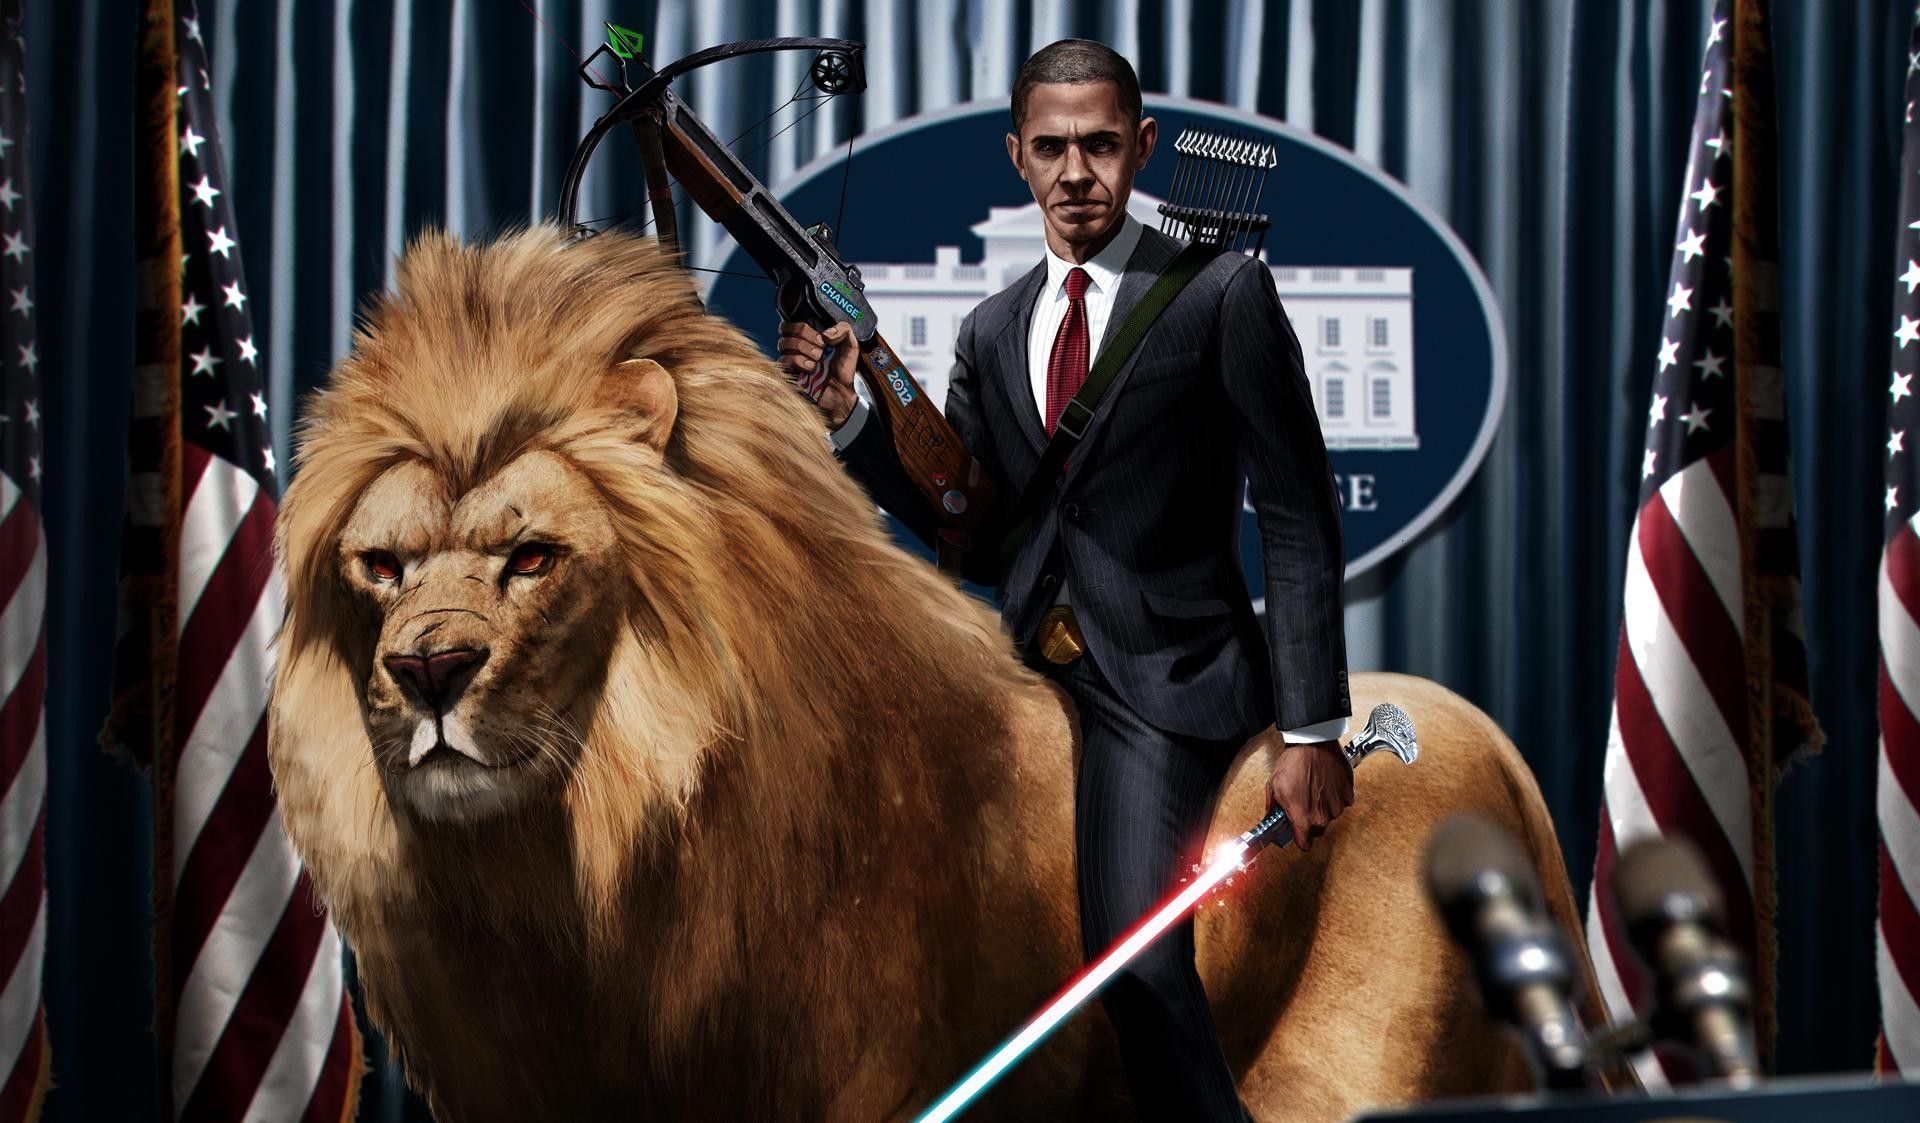 Barack Obama saddled lion wallpapers and images - wallpapers ...